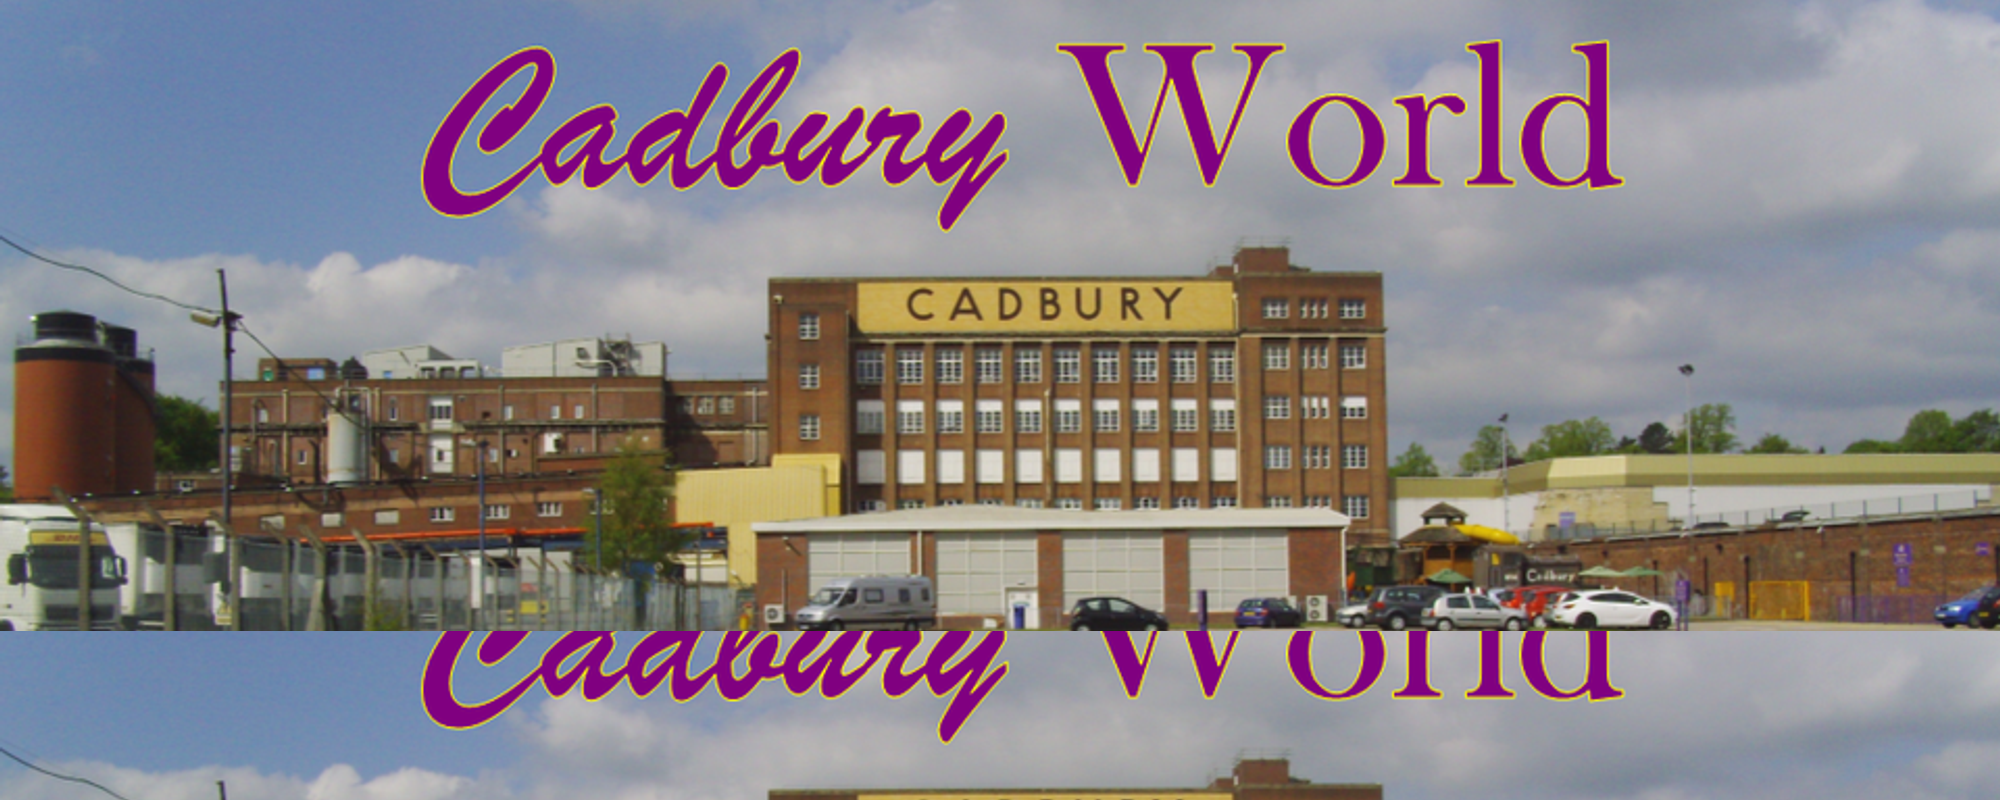 Cadbury  World - Birmingham, England